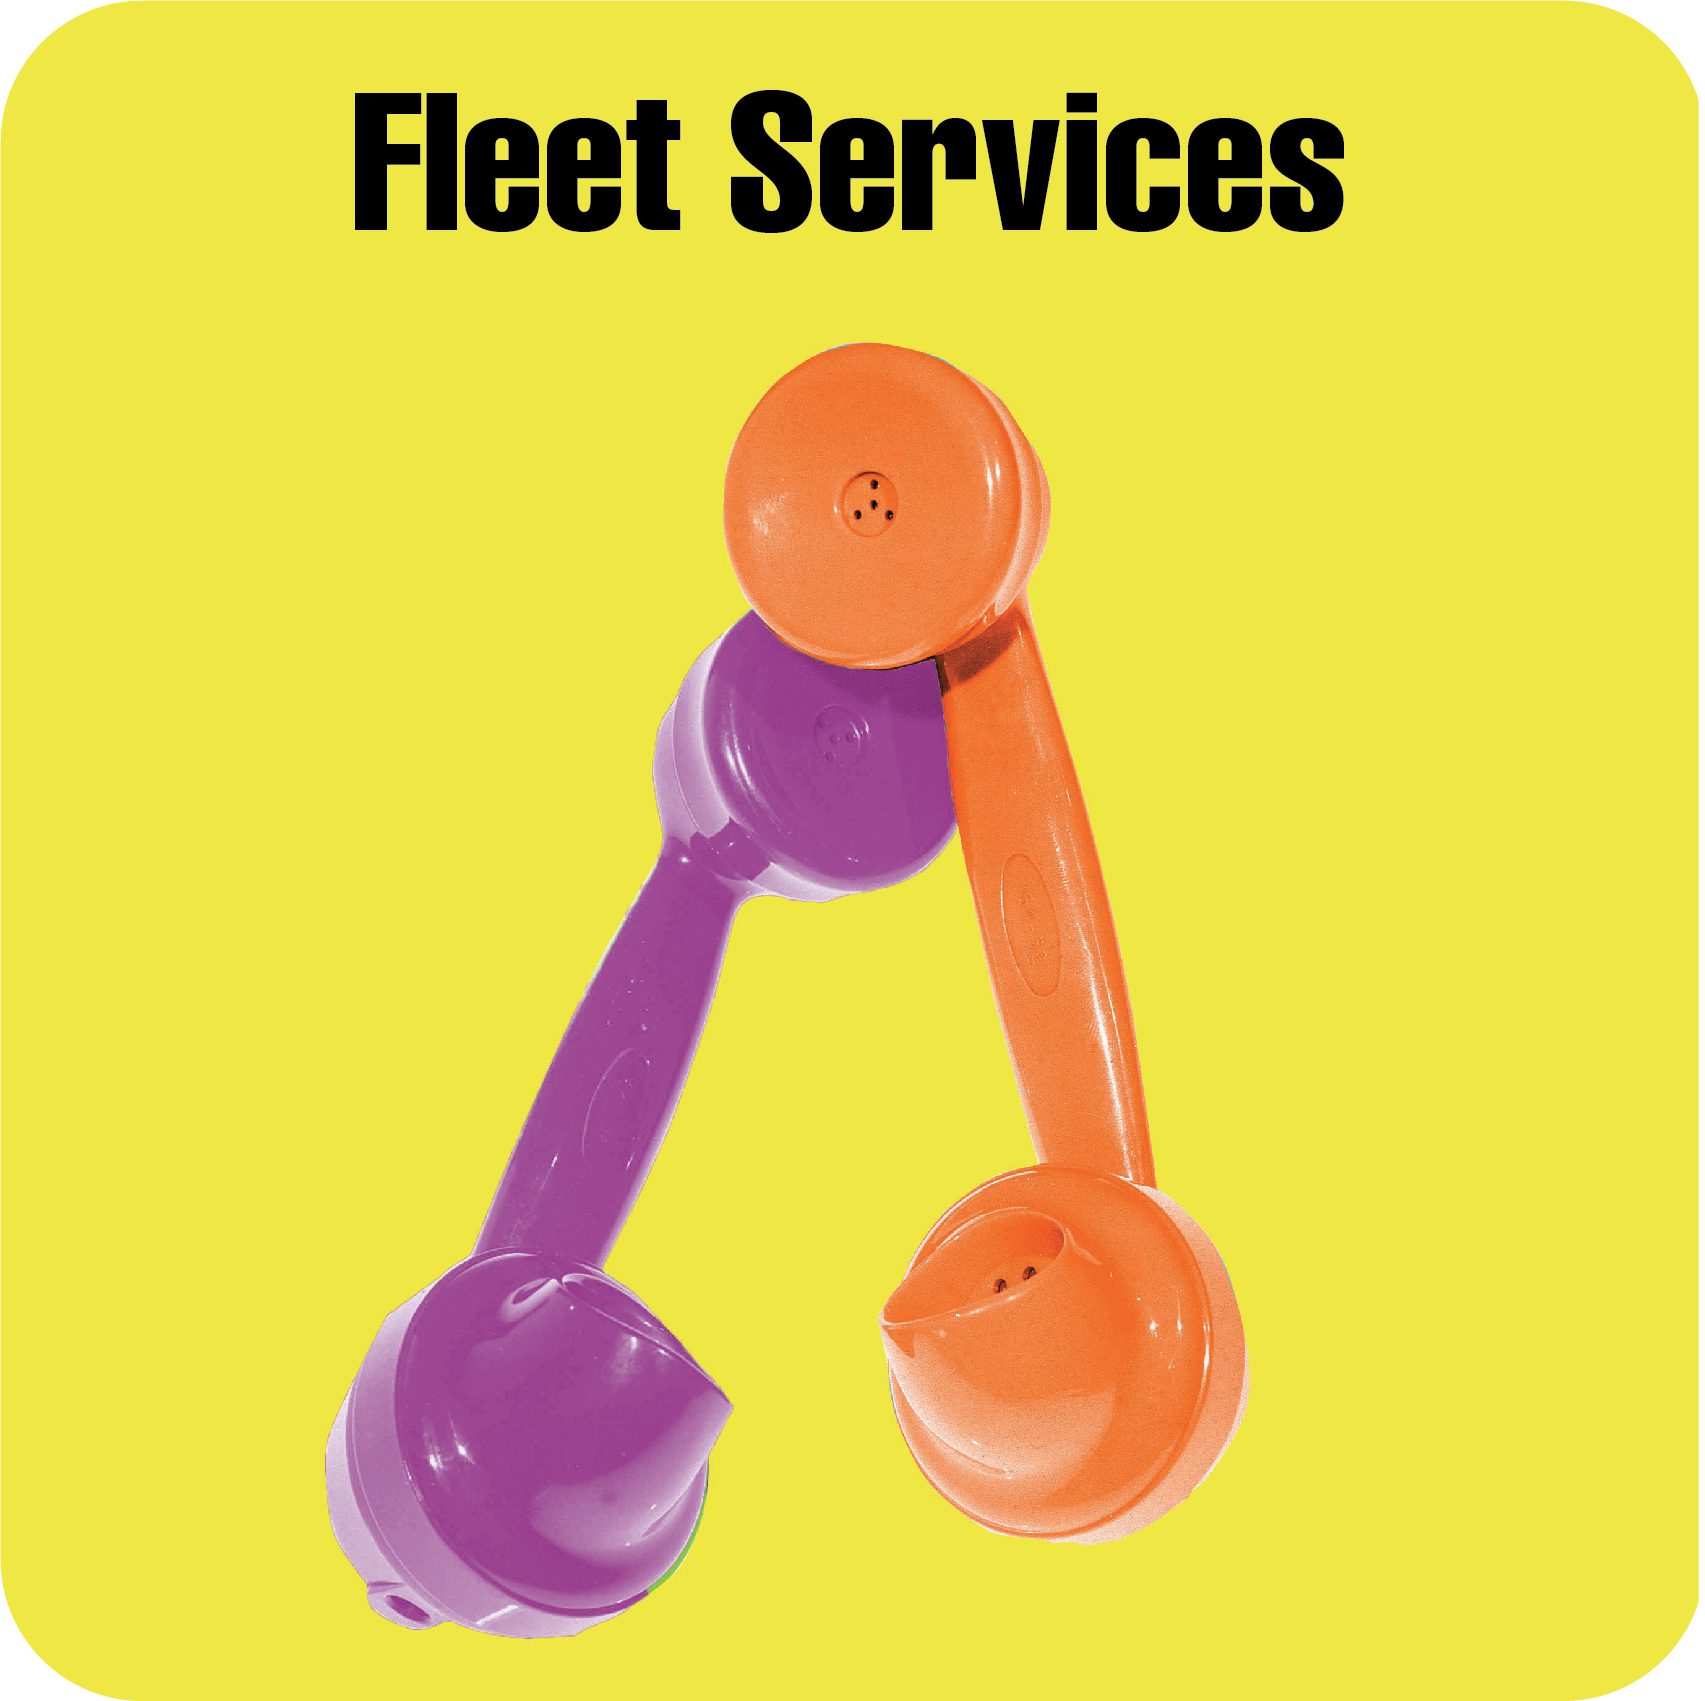 MJ Flood fleet services for photocopiers